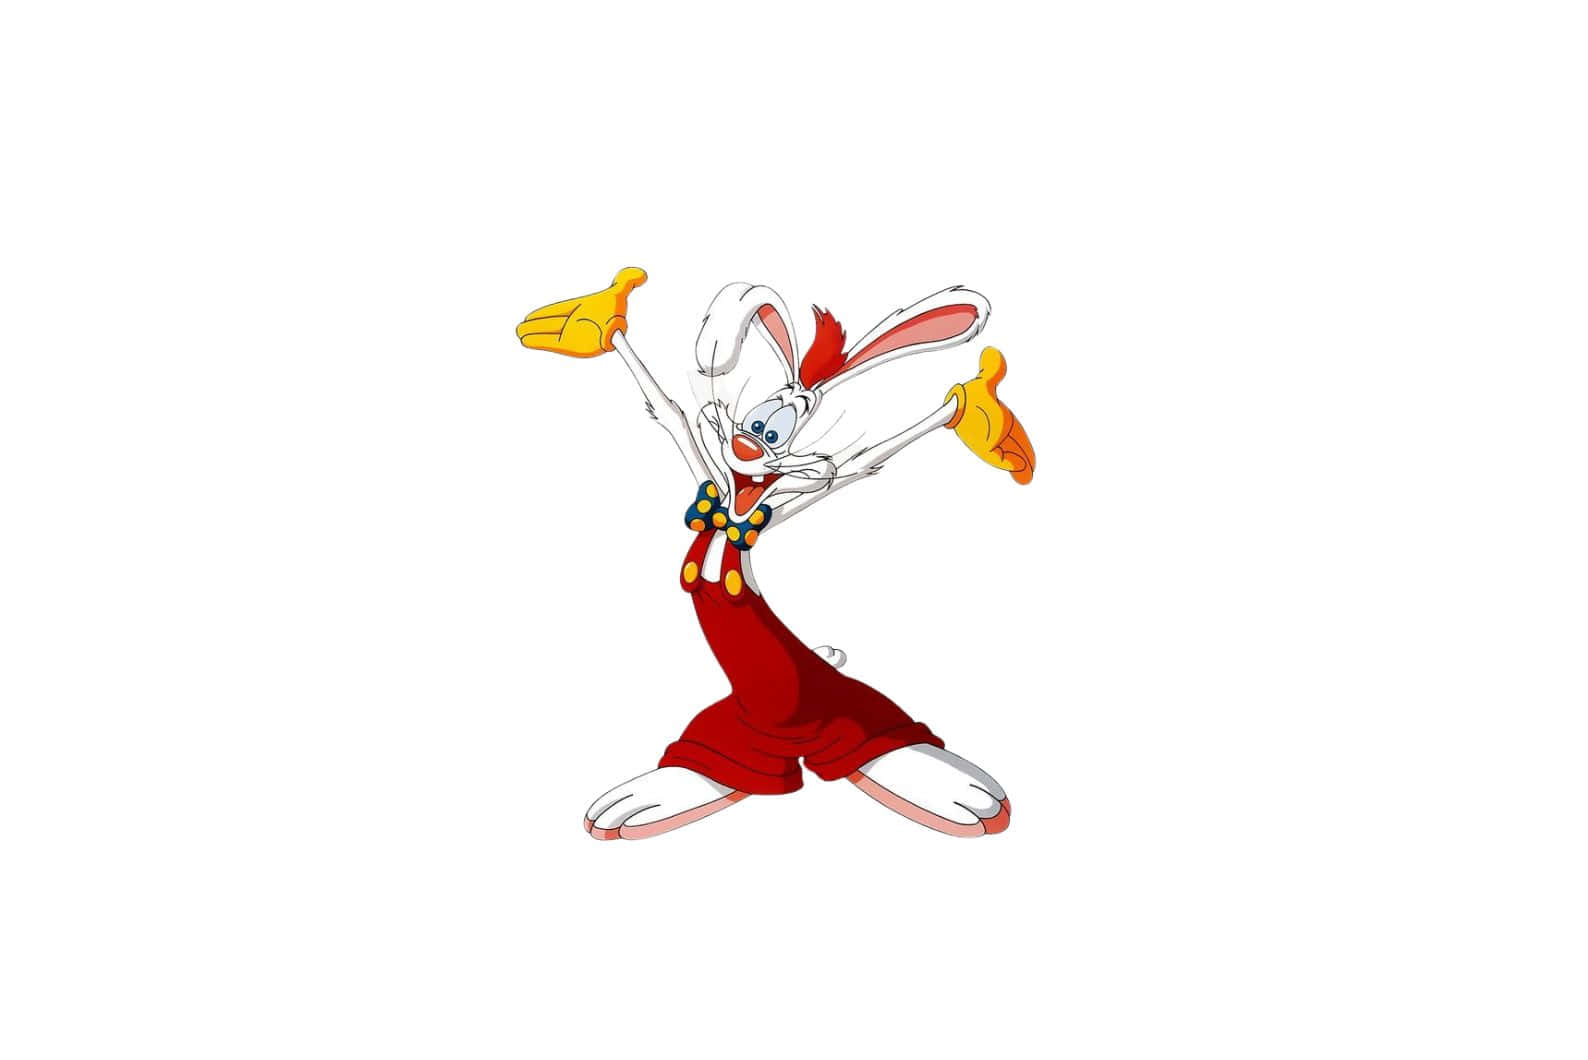 Roger Rabbit Cartoon Character Jumping